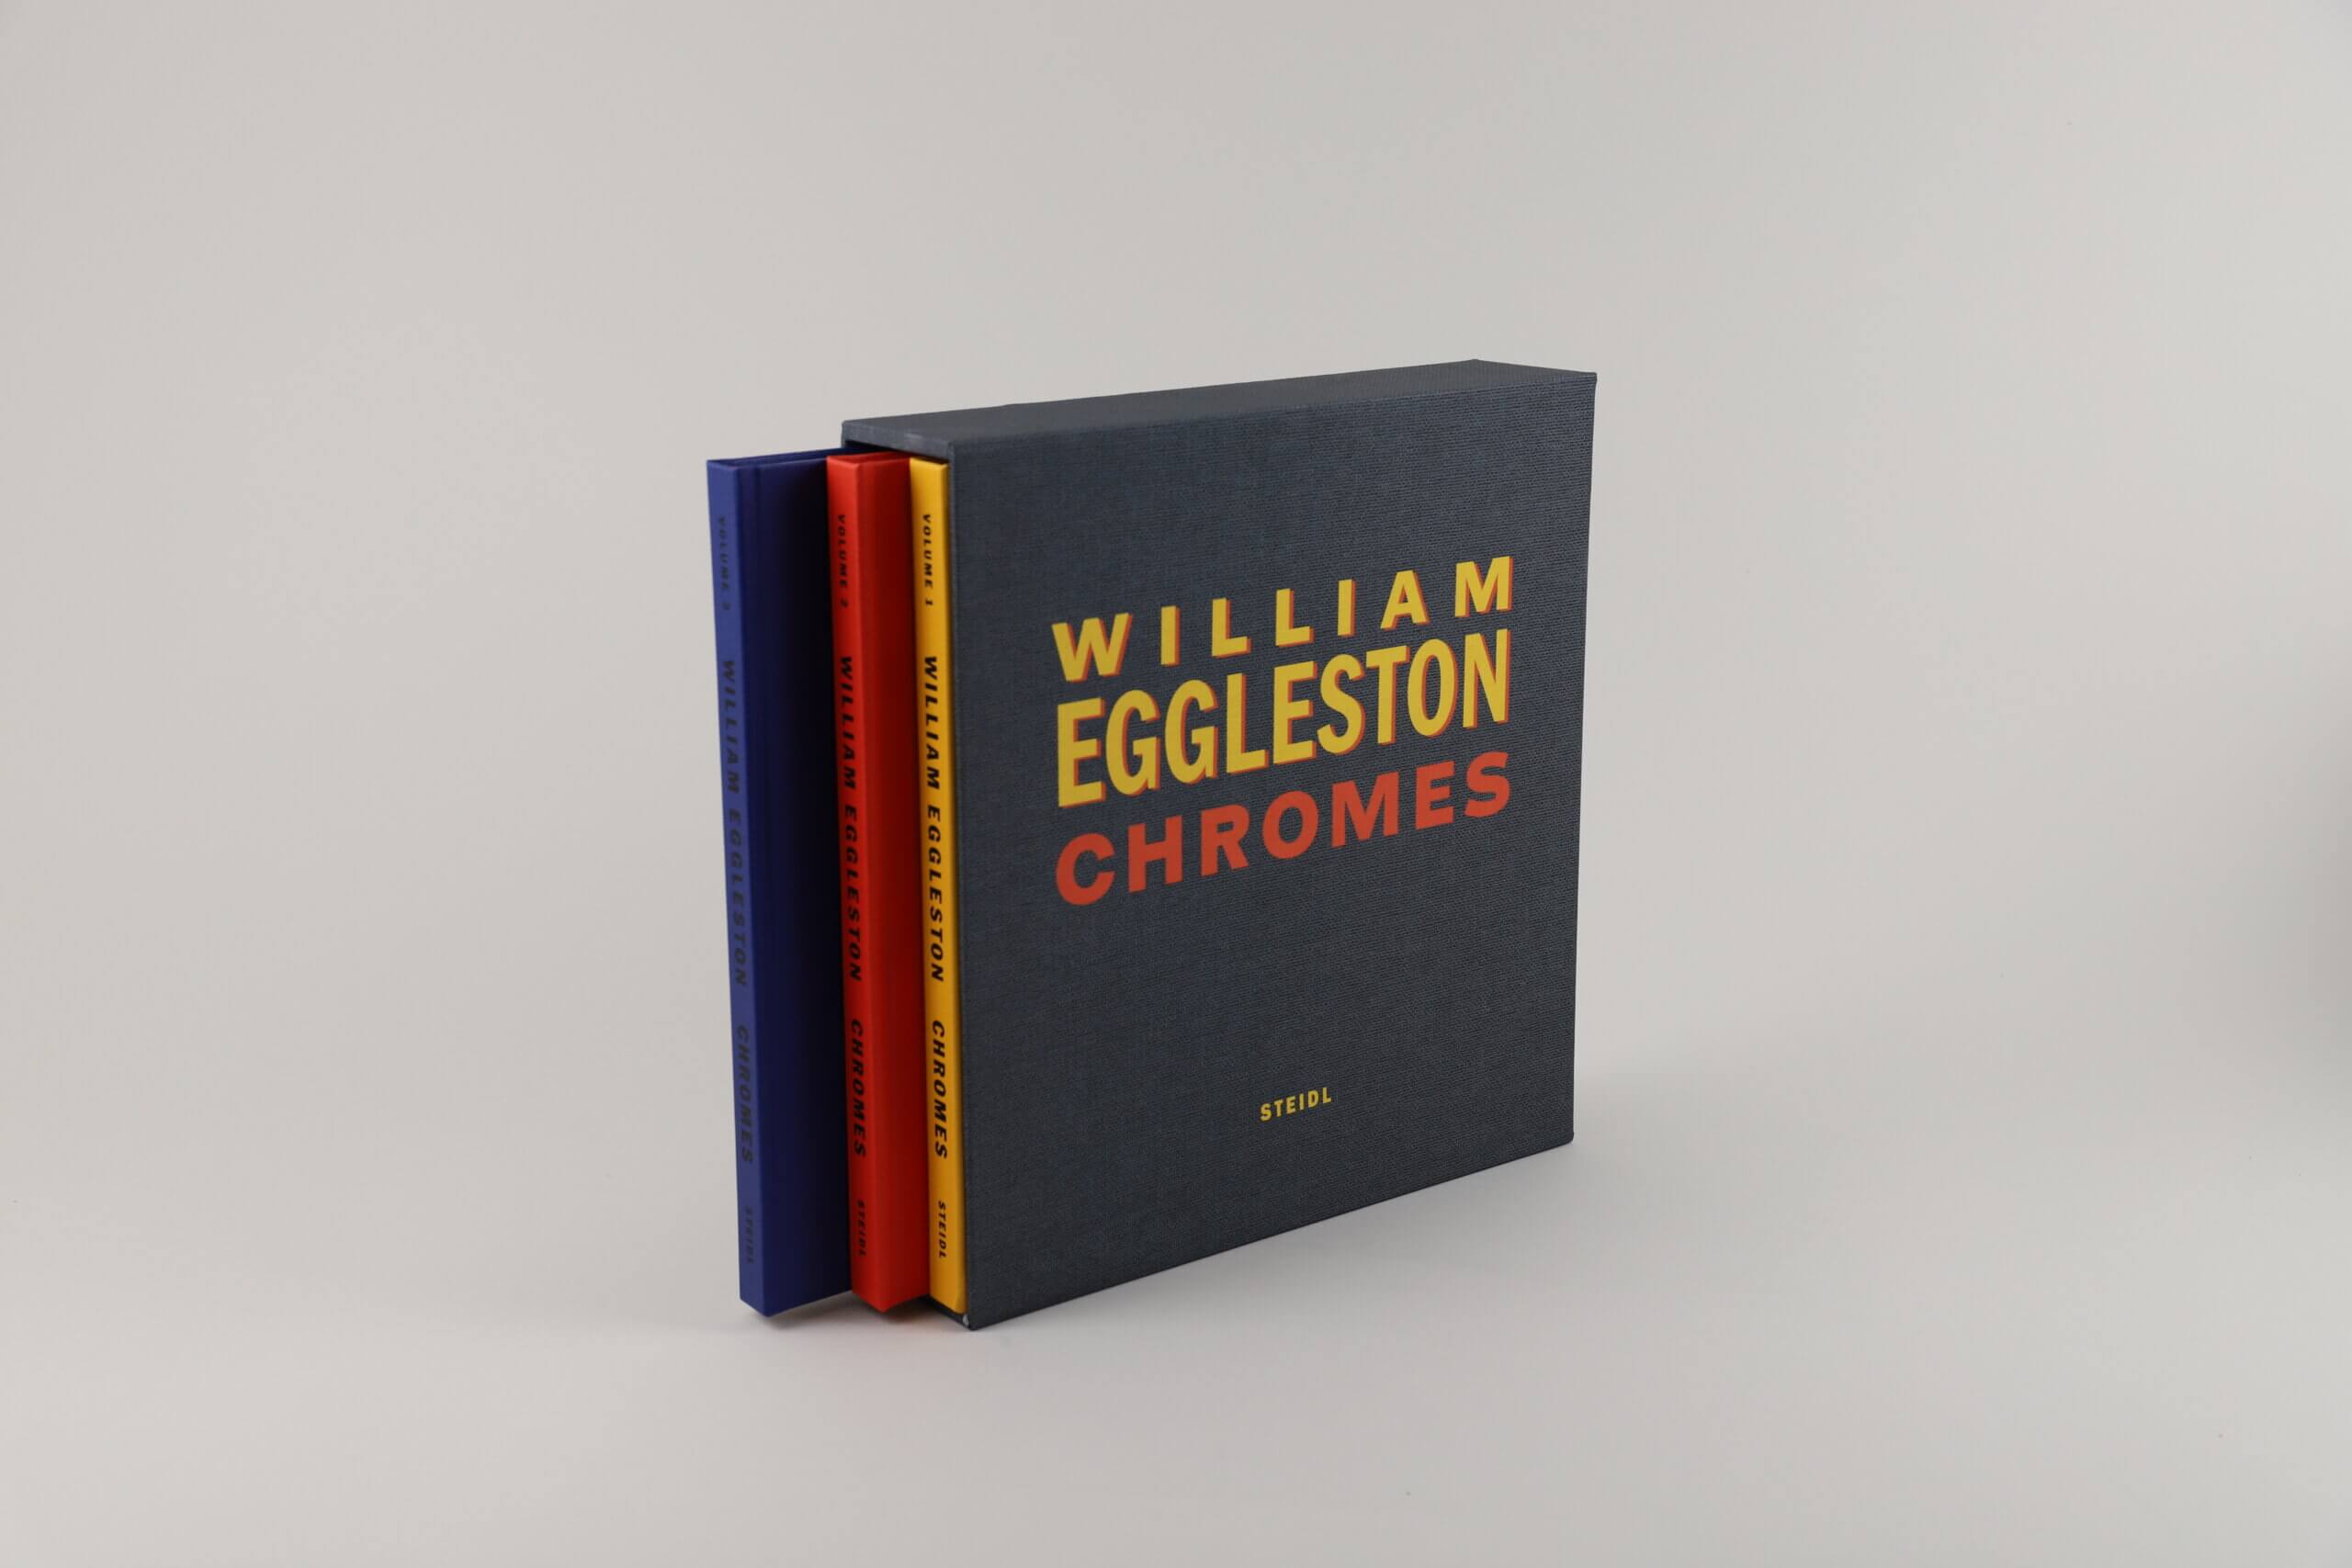 Chromes-revised-wiilliam-eggleston-steidl-cover